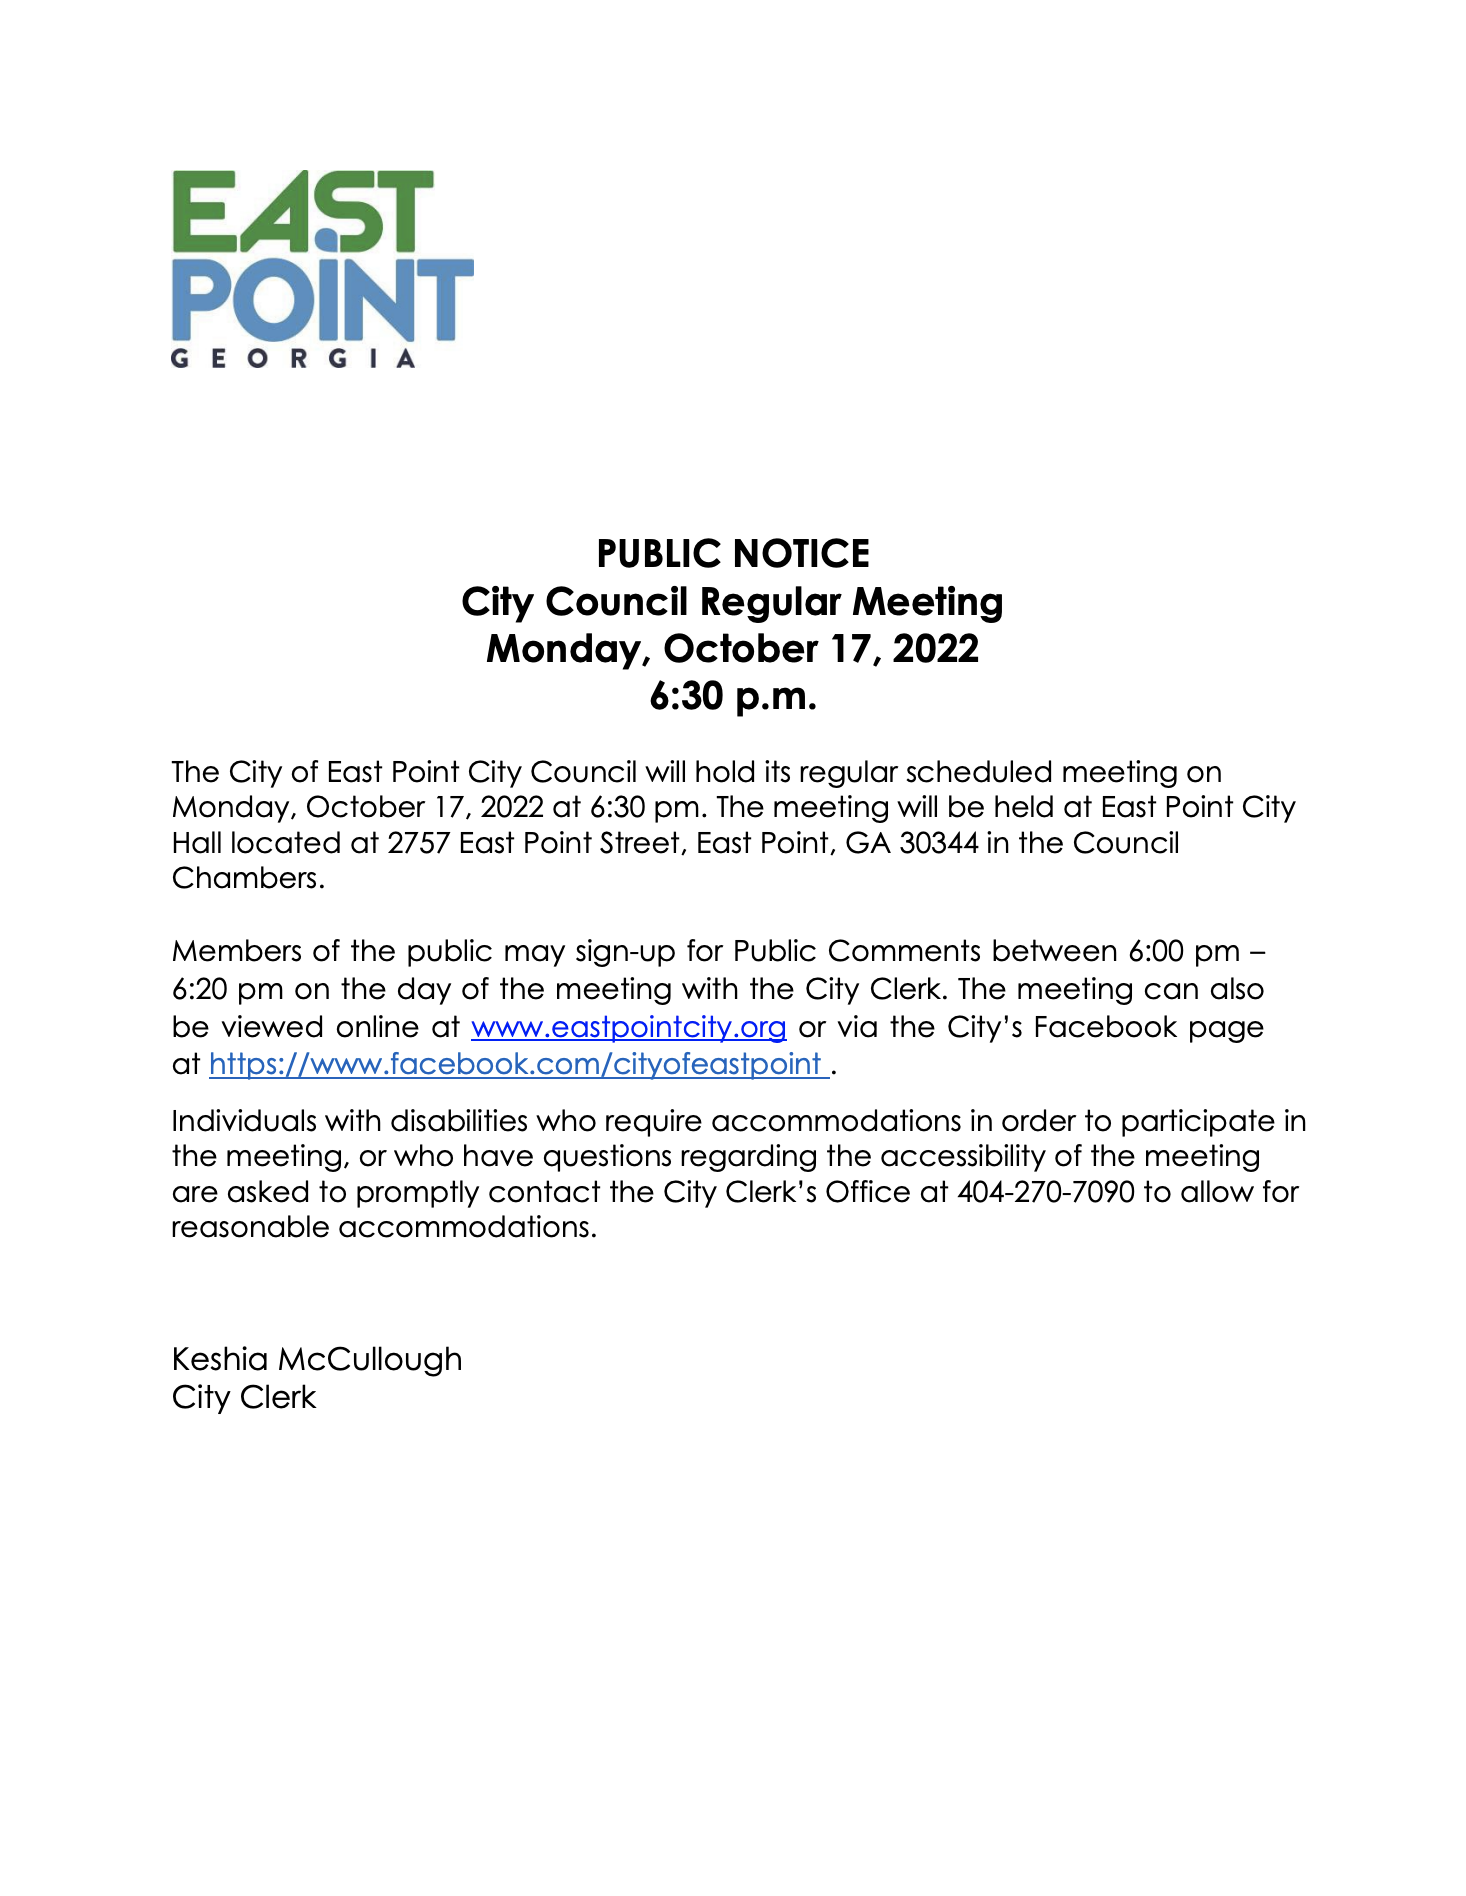 Public Notice-City Council Regular Meeting (October 17, 2022)